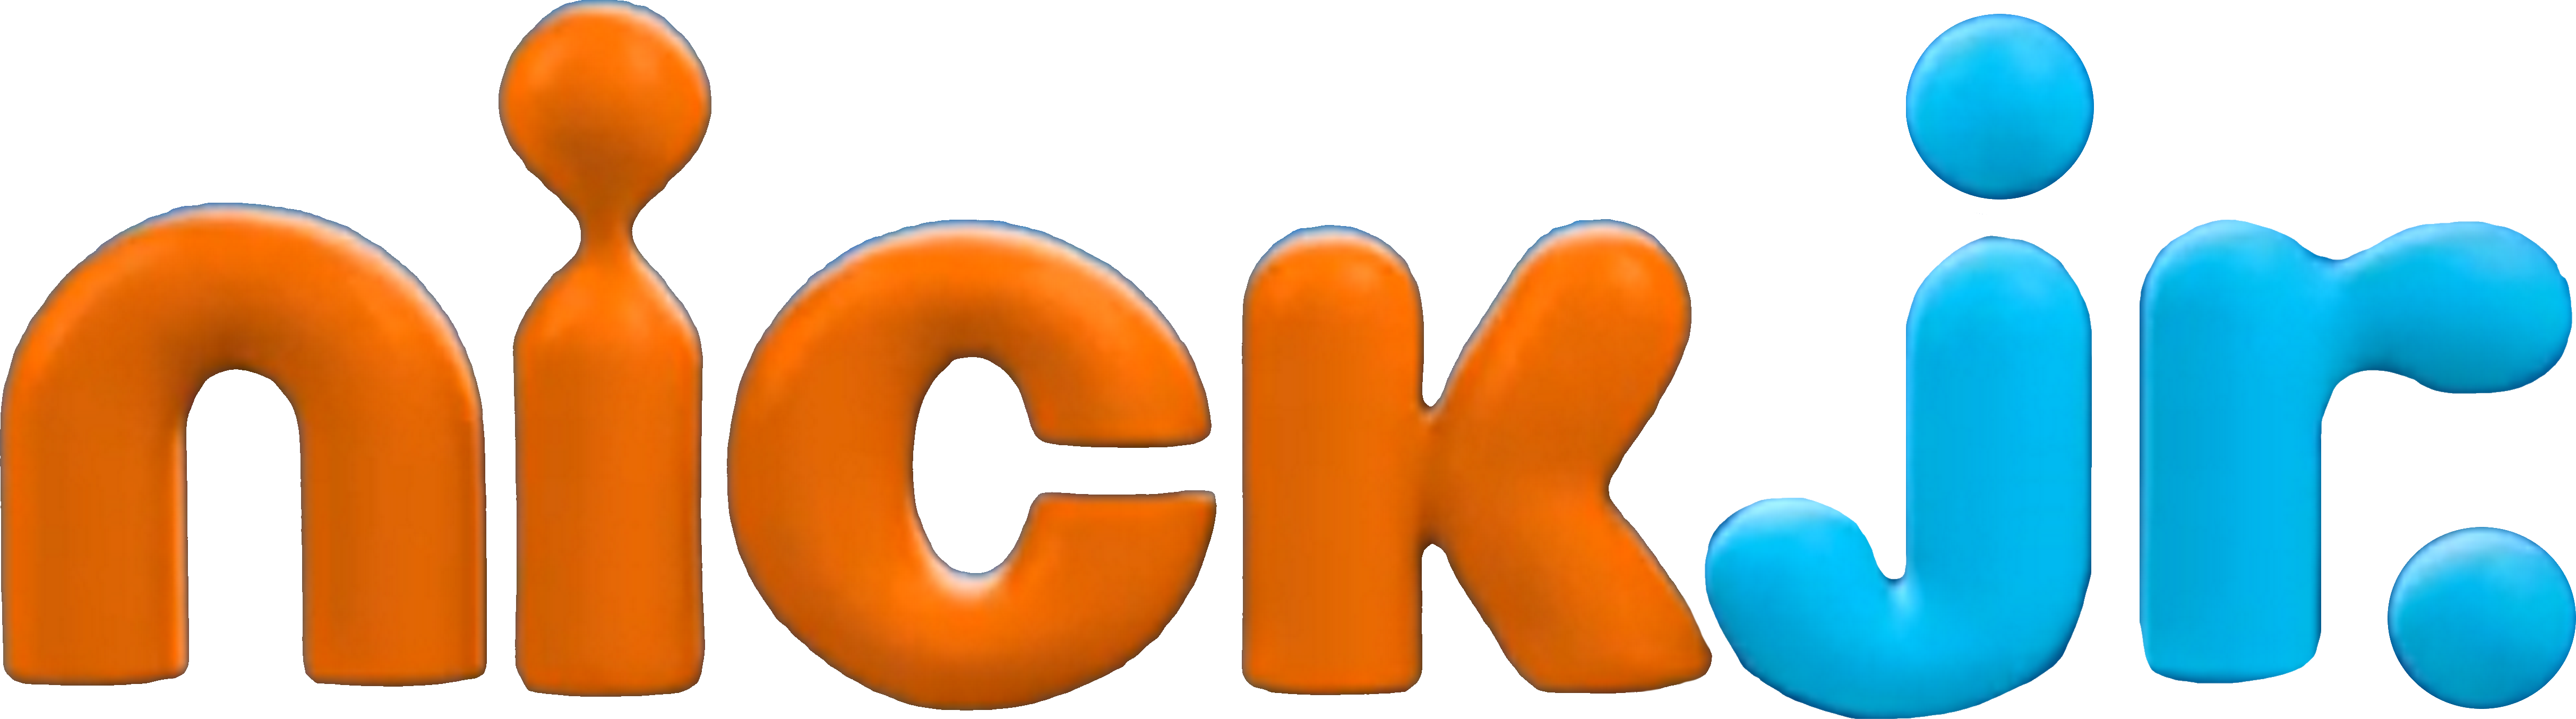 Nick Jr New Logo